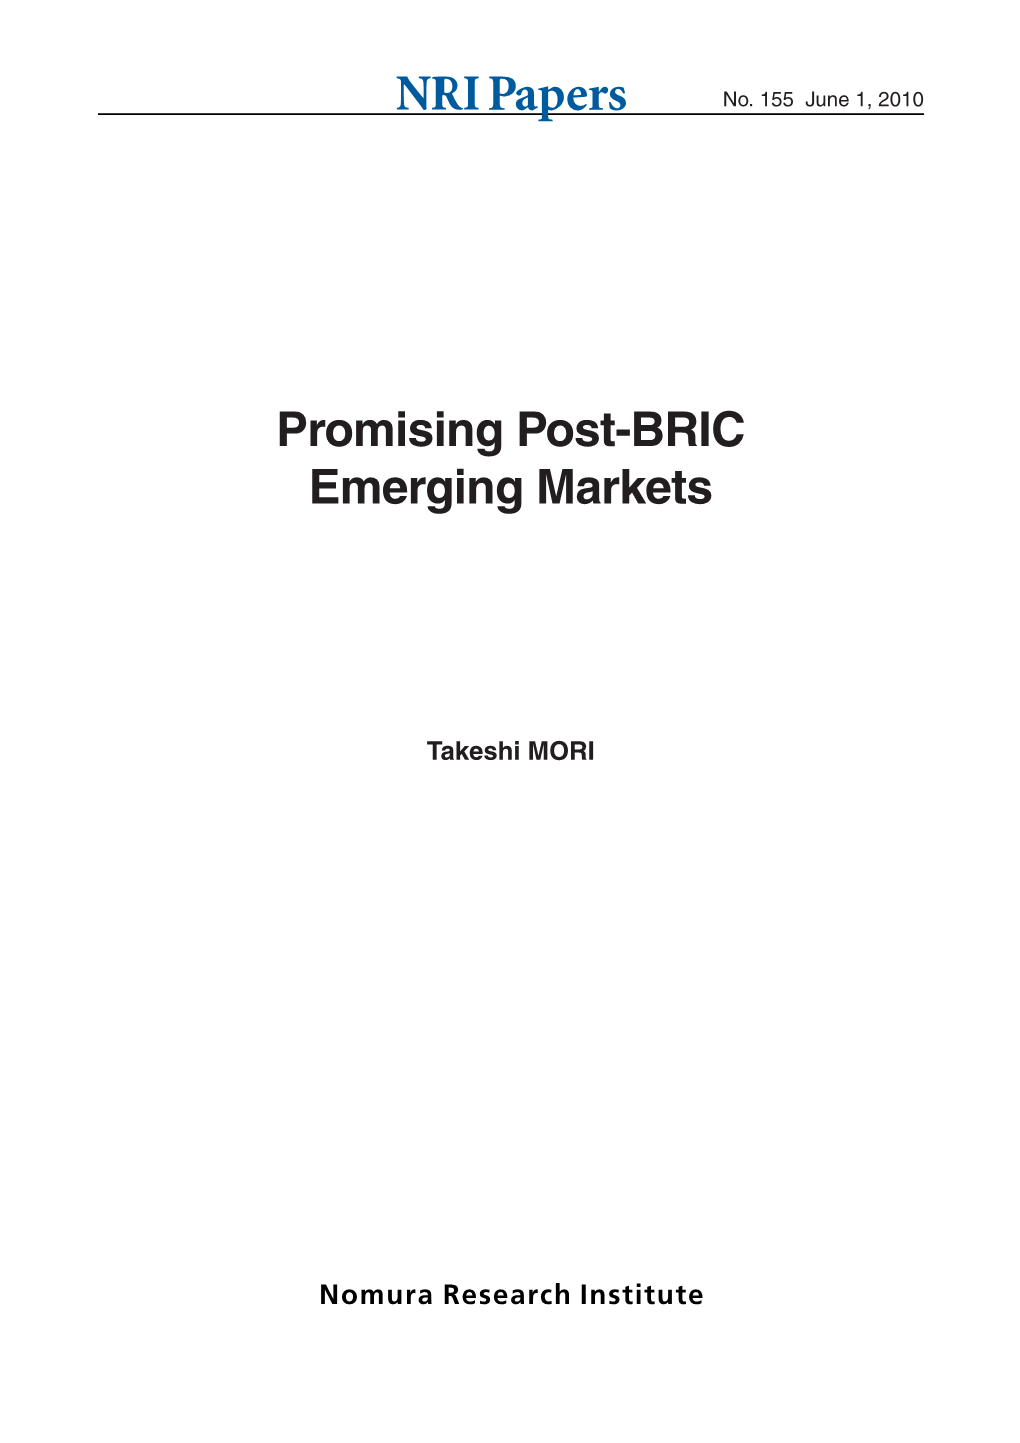 Promising Post-BRIC Emerging Markets